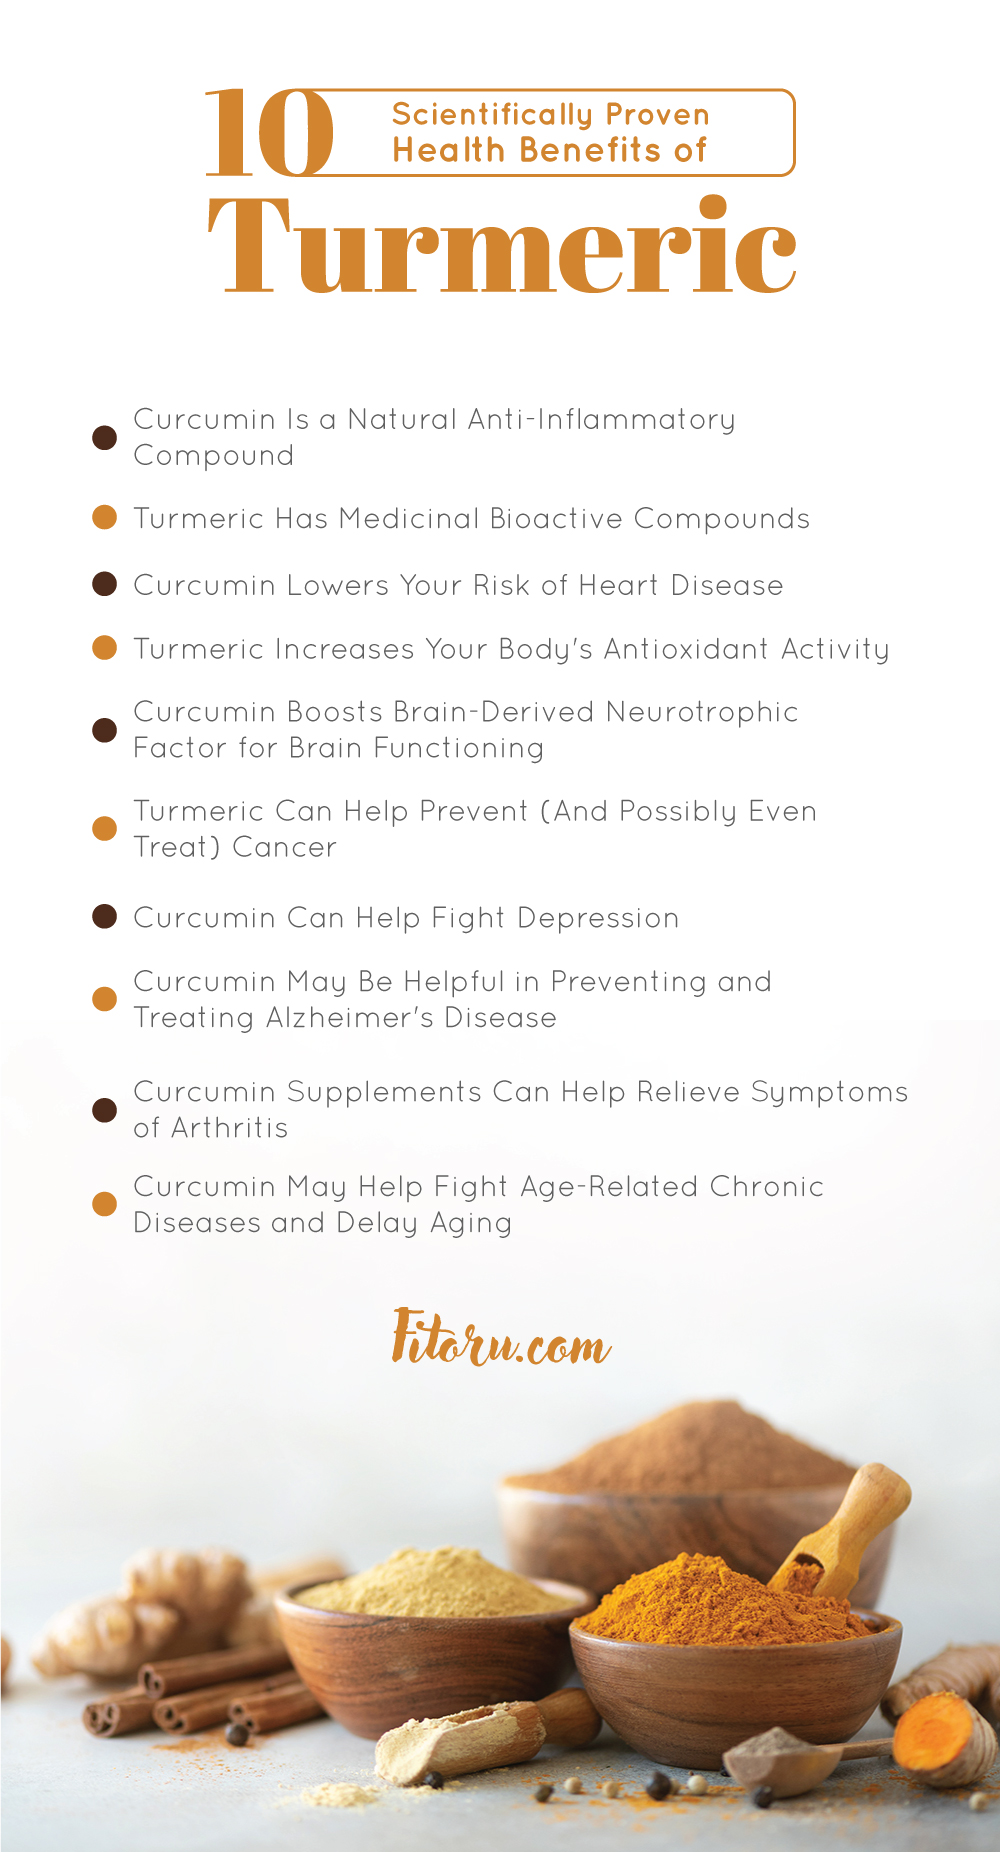 The health benefits of turmeric and curcumin.